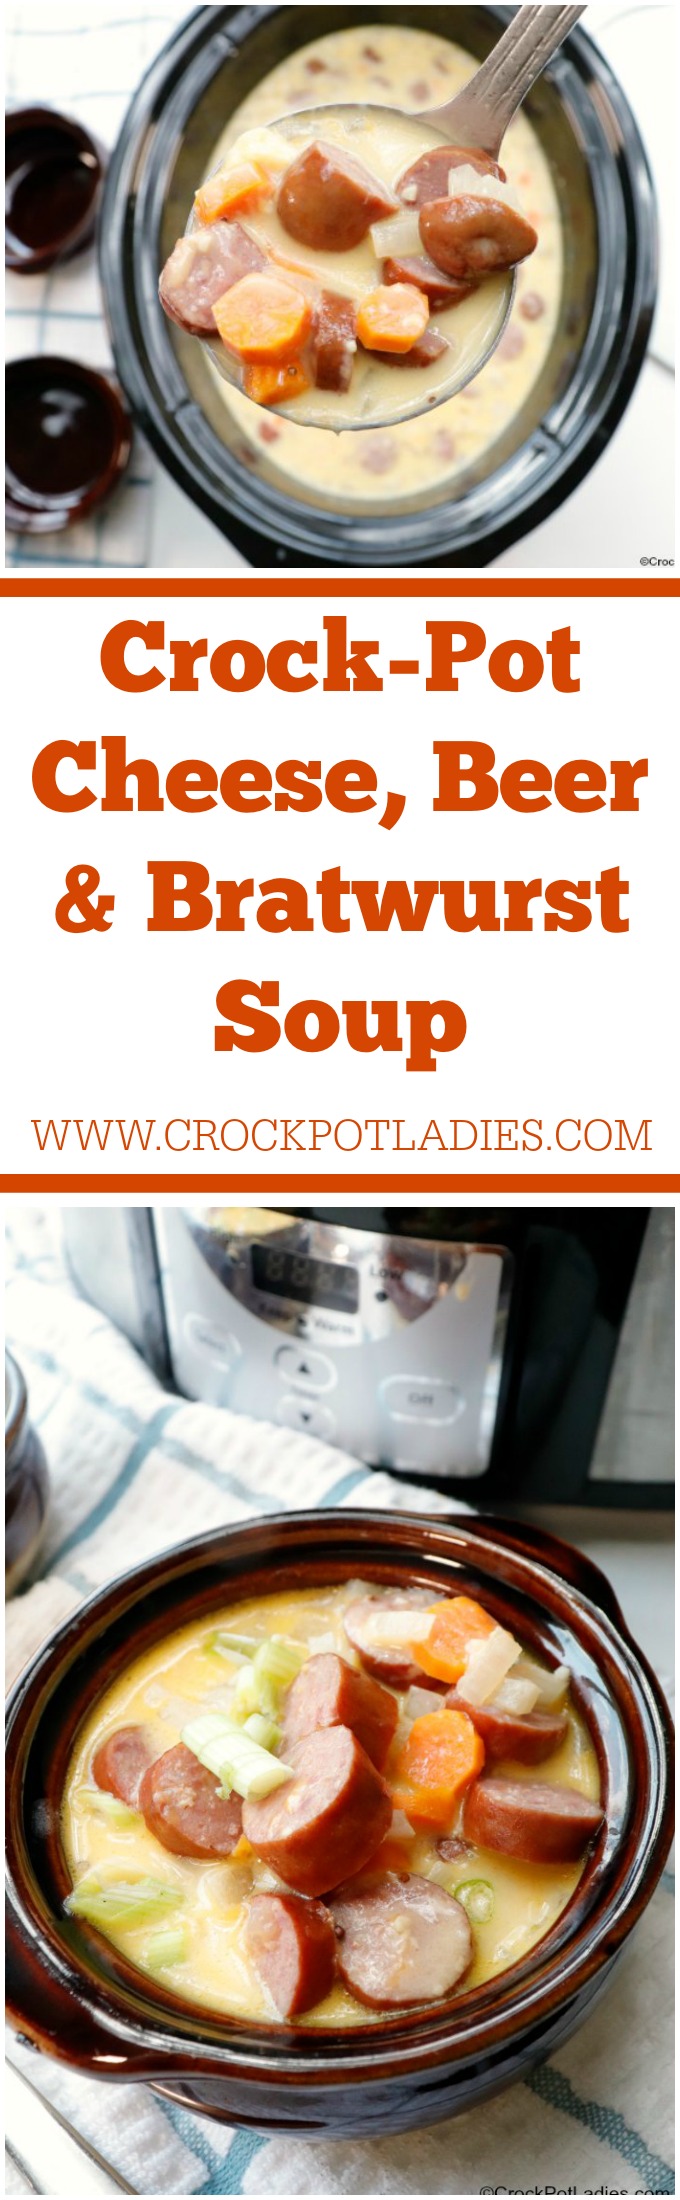 Crock-Pot Cheese, Beer & Bratwurst Soup